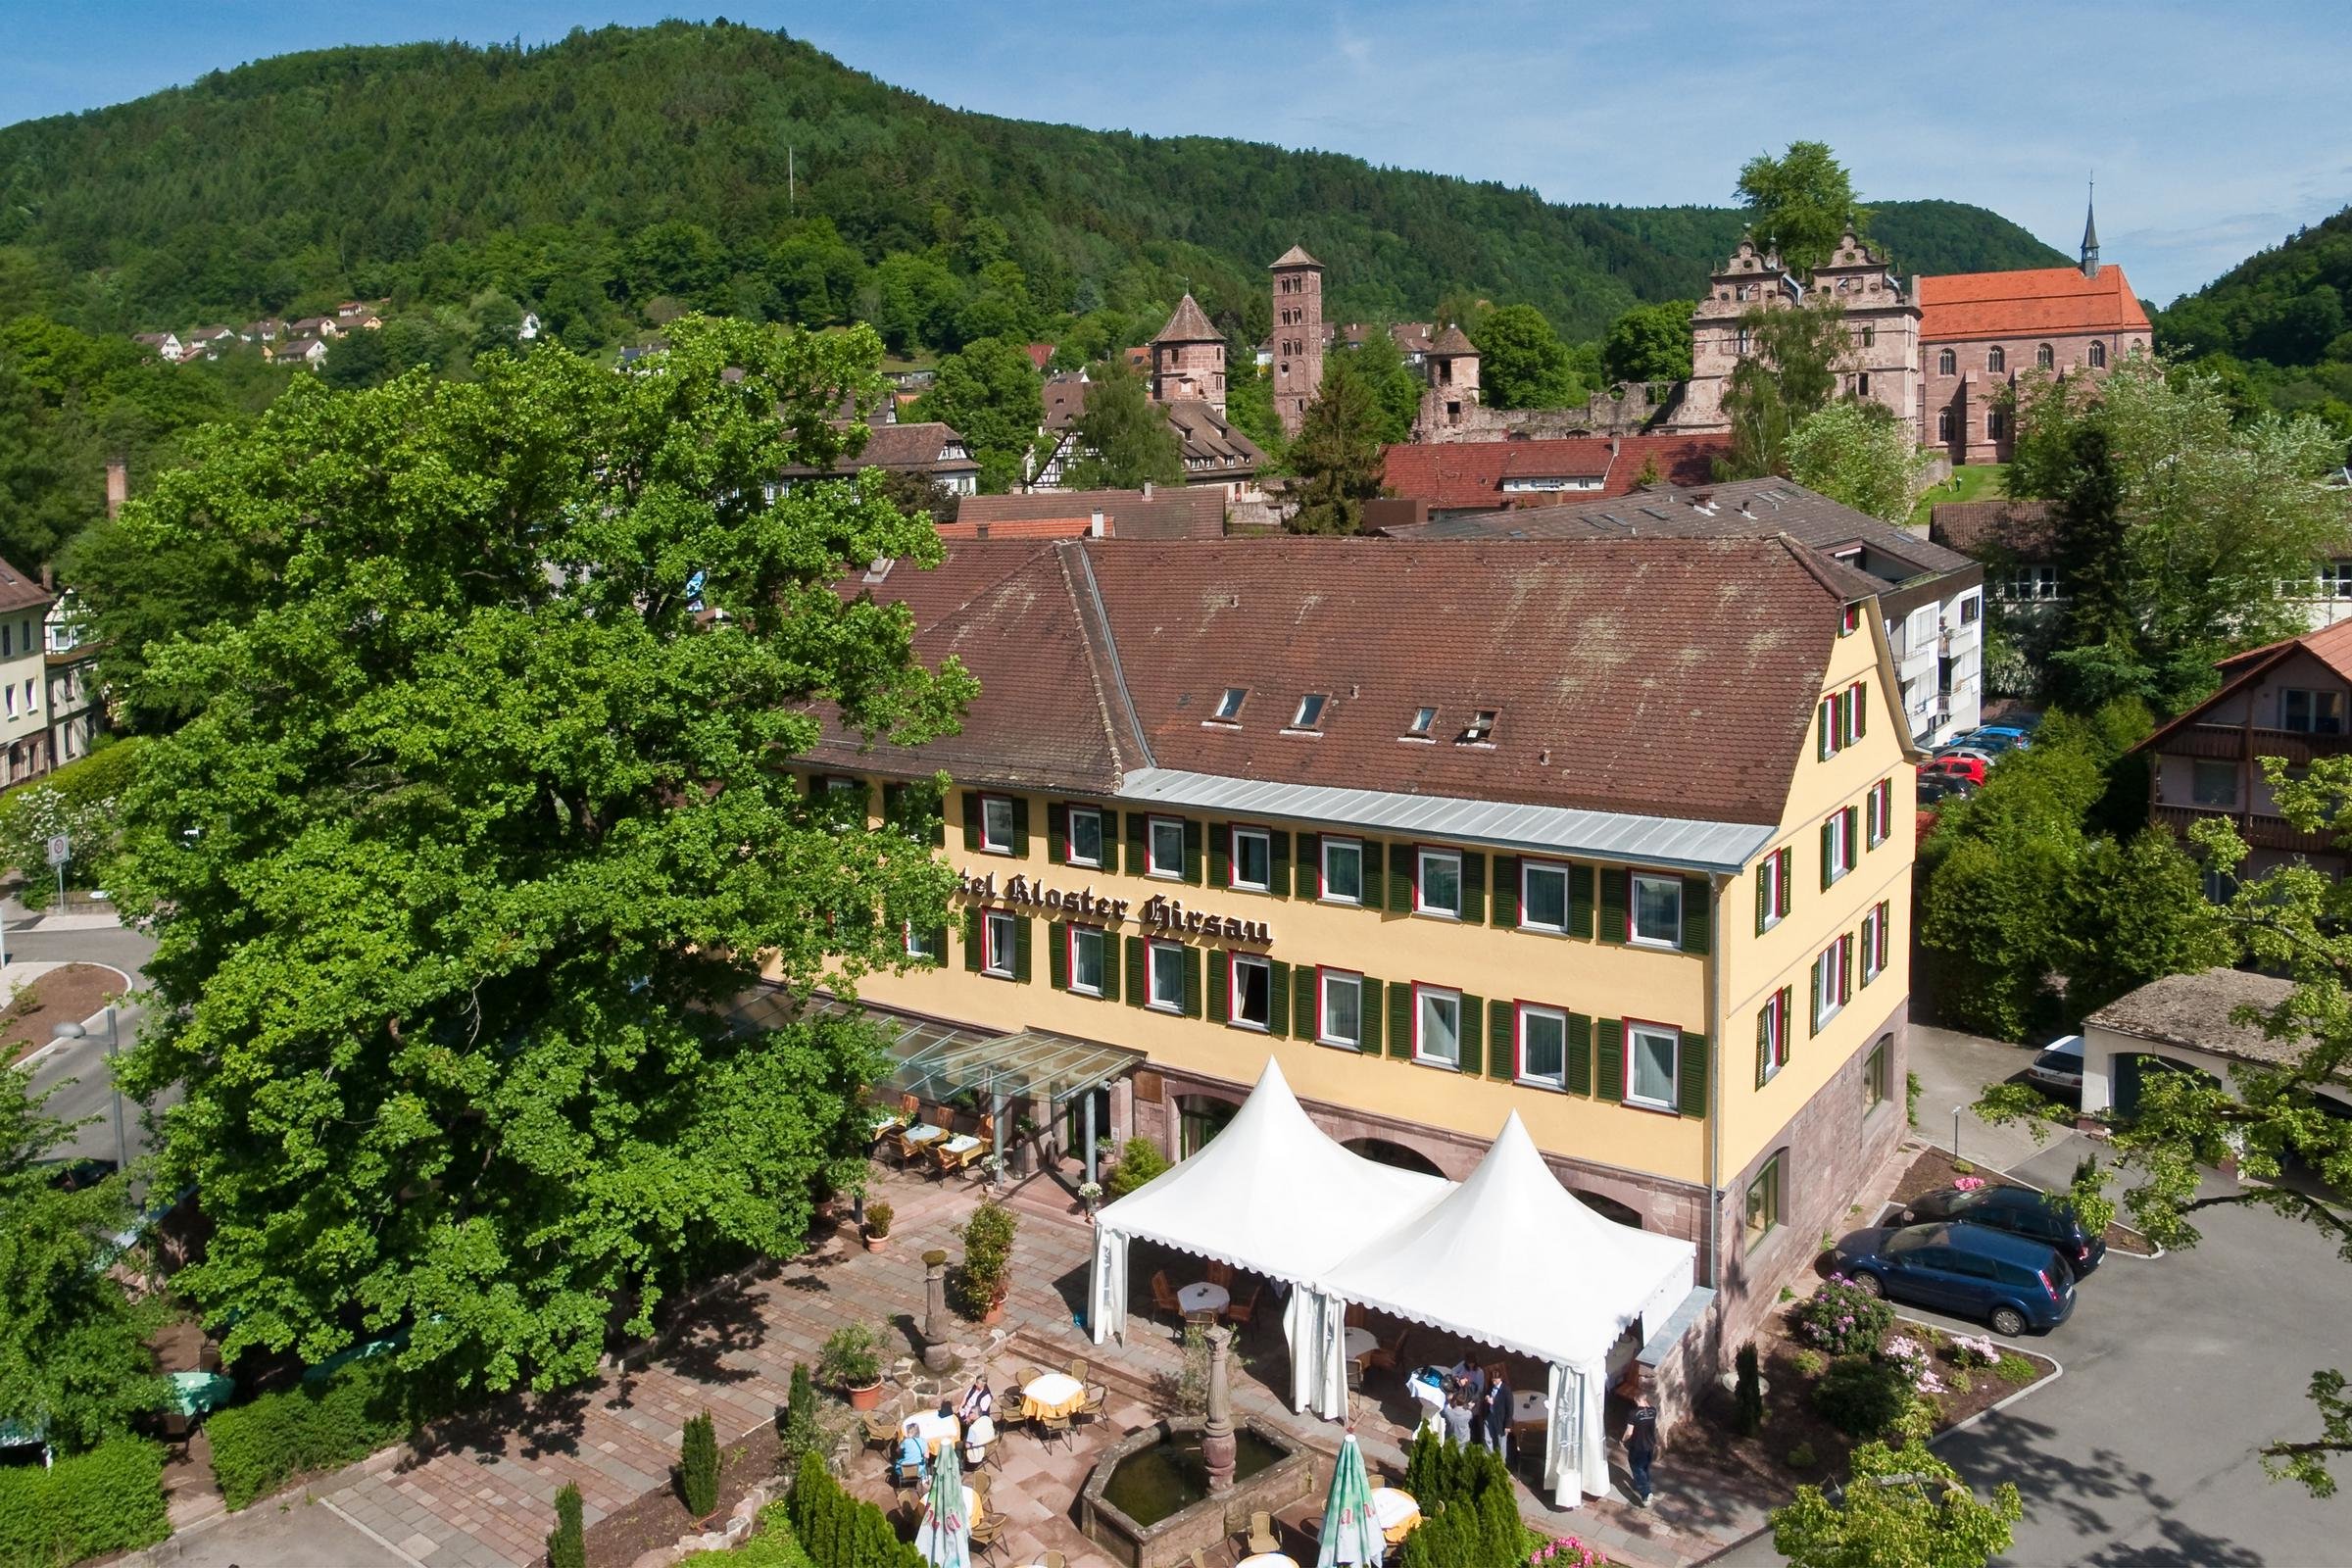 5 Tage Das ist Wanderbar – Hotel Kloster Hirsau (4 Sterne) in Calw, Baden-Württemberg inkl. Halbpension